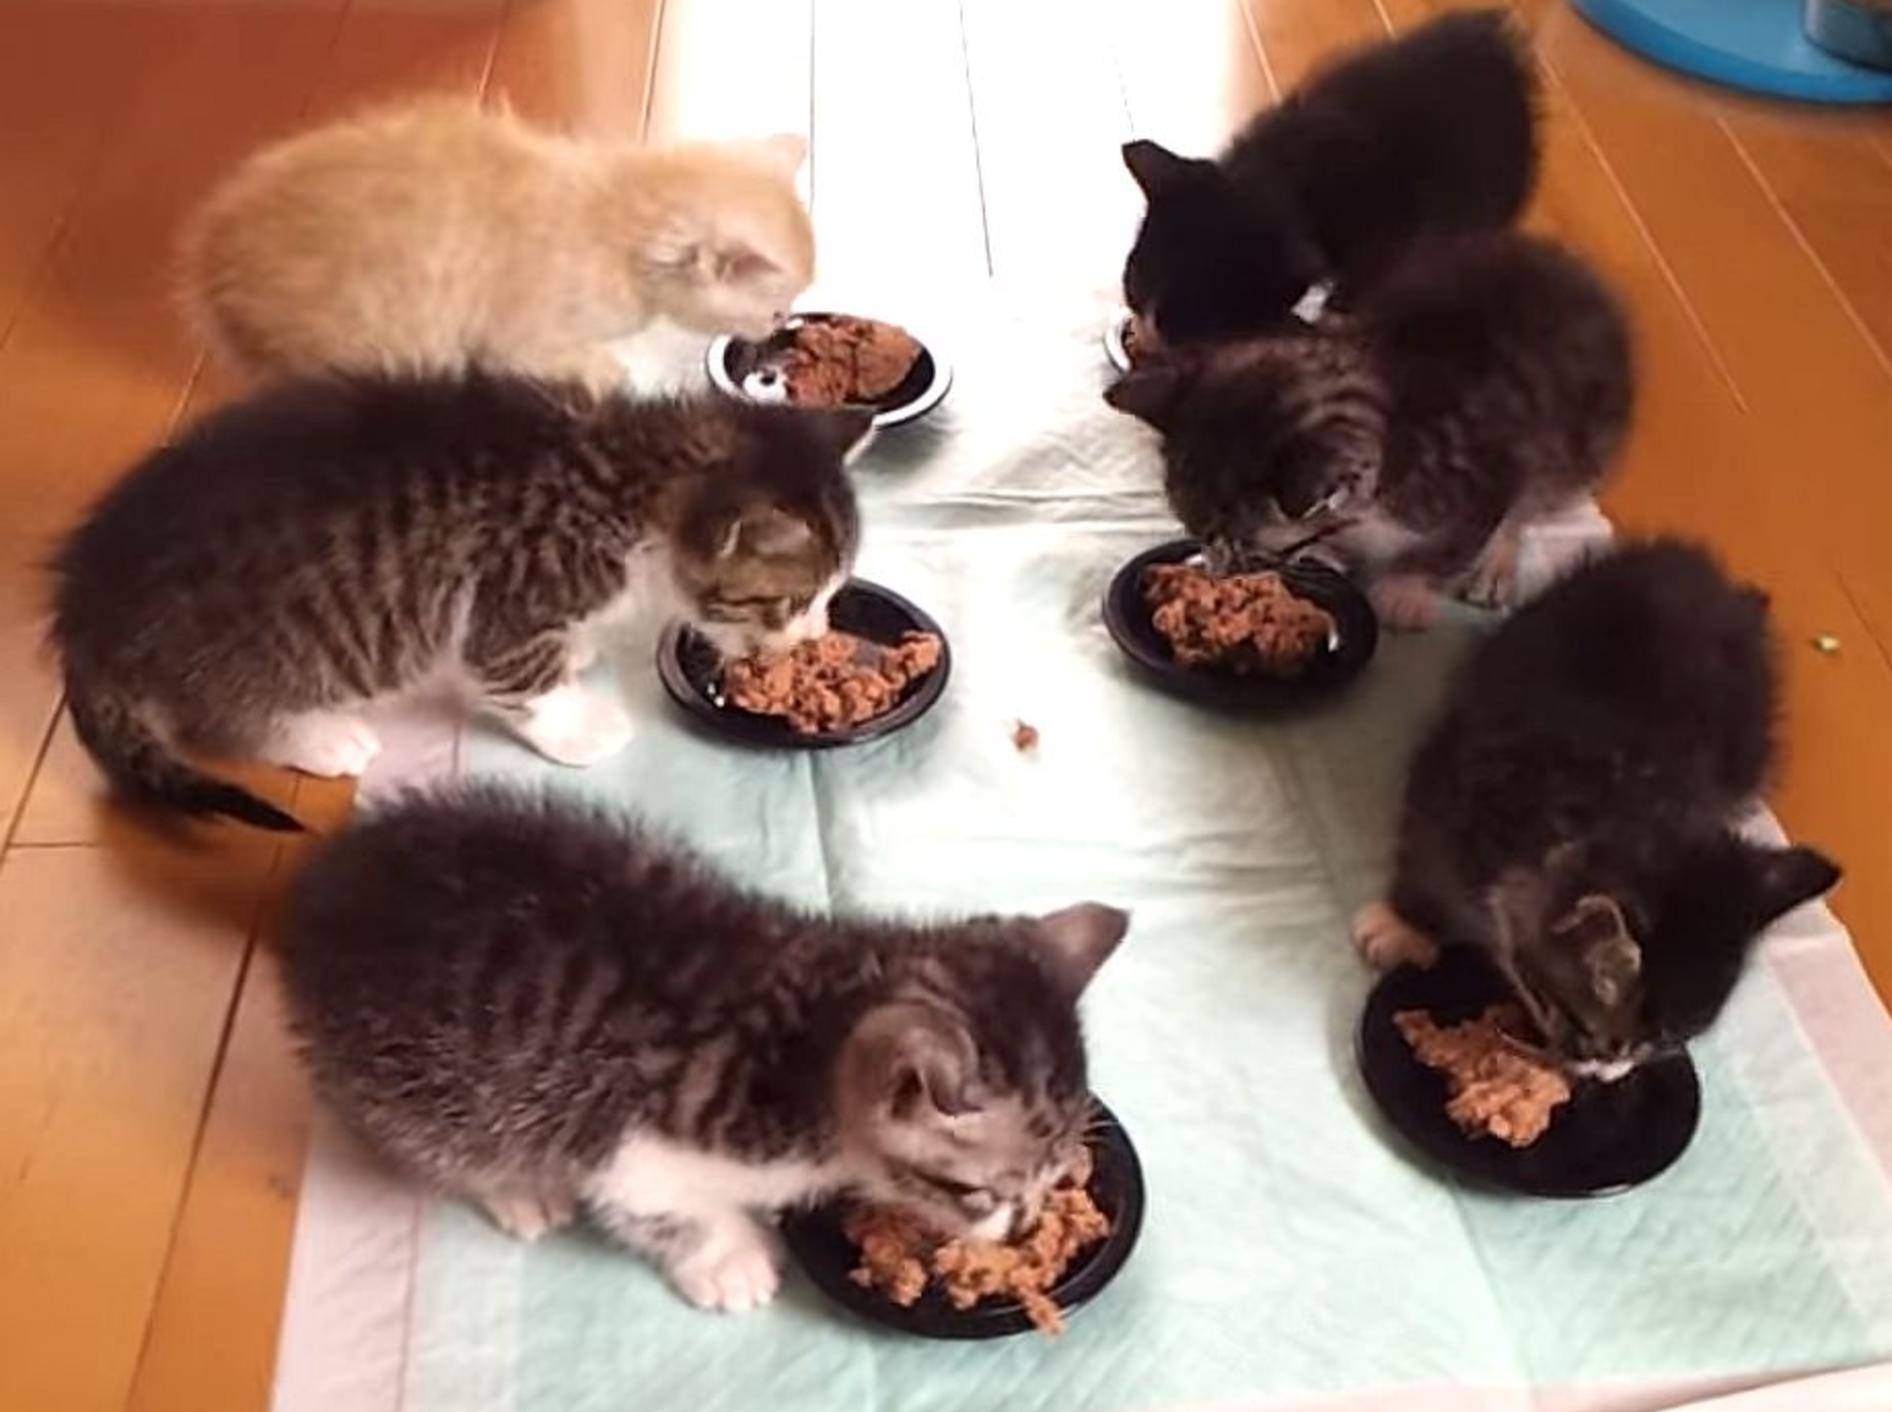 Supersüße Abendbrotzeit bei Katzenbabys – Bild: Youtube / tarochinnappy